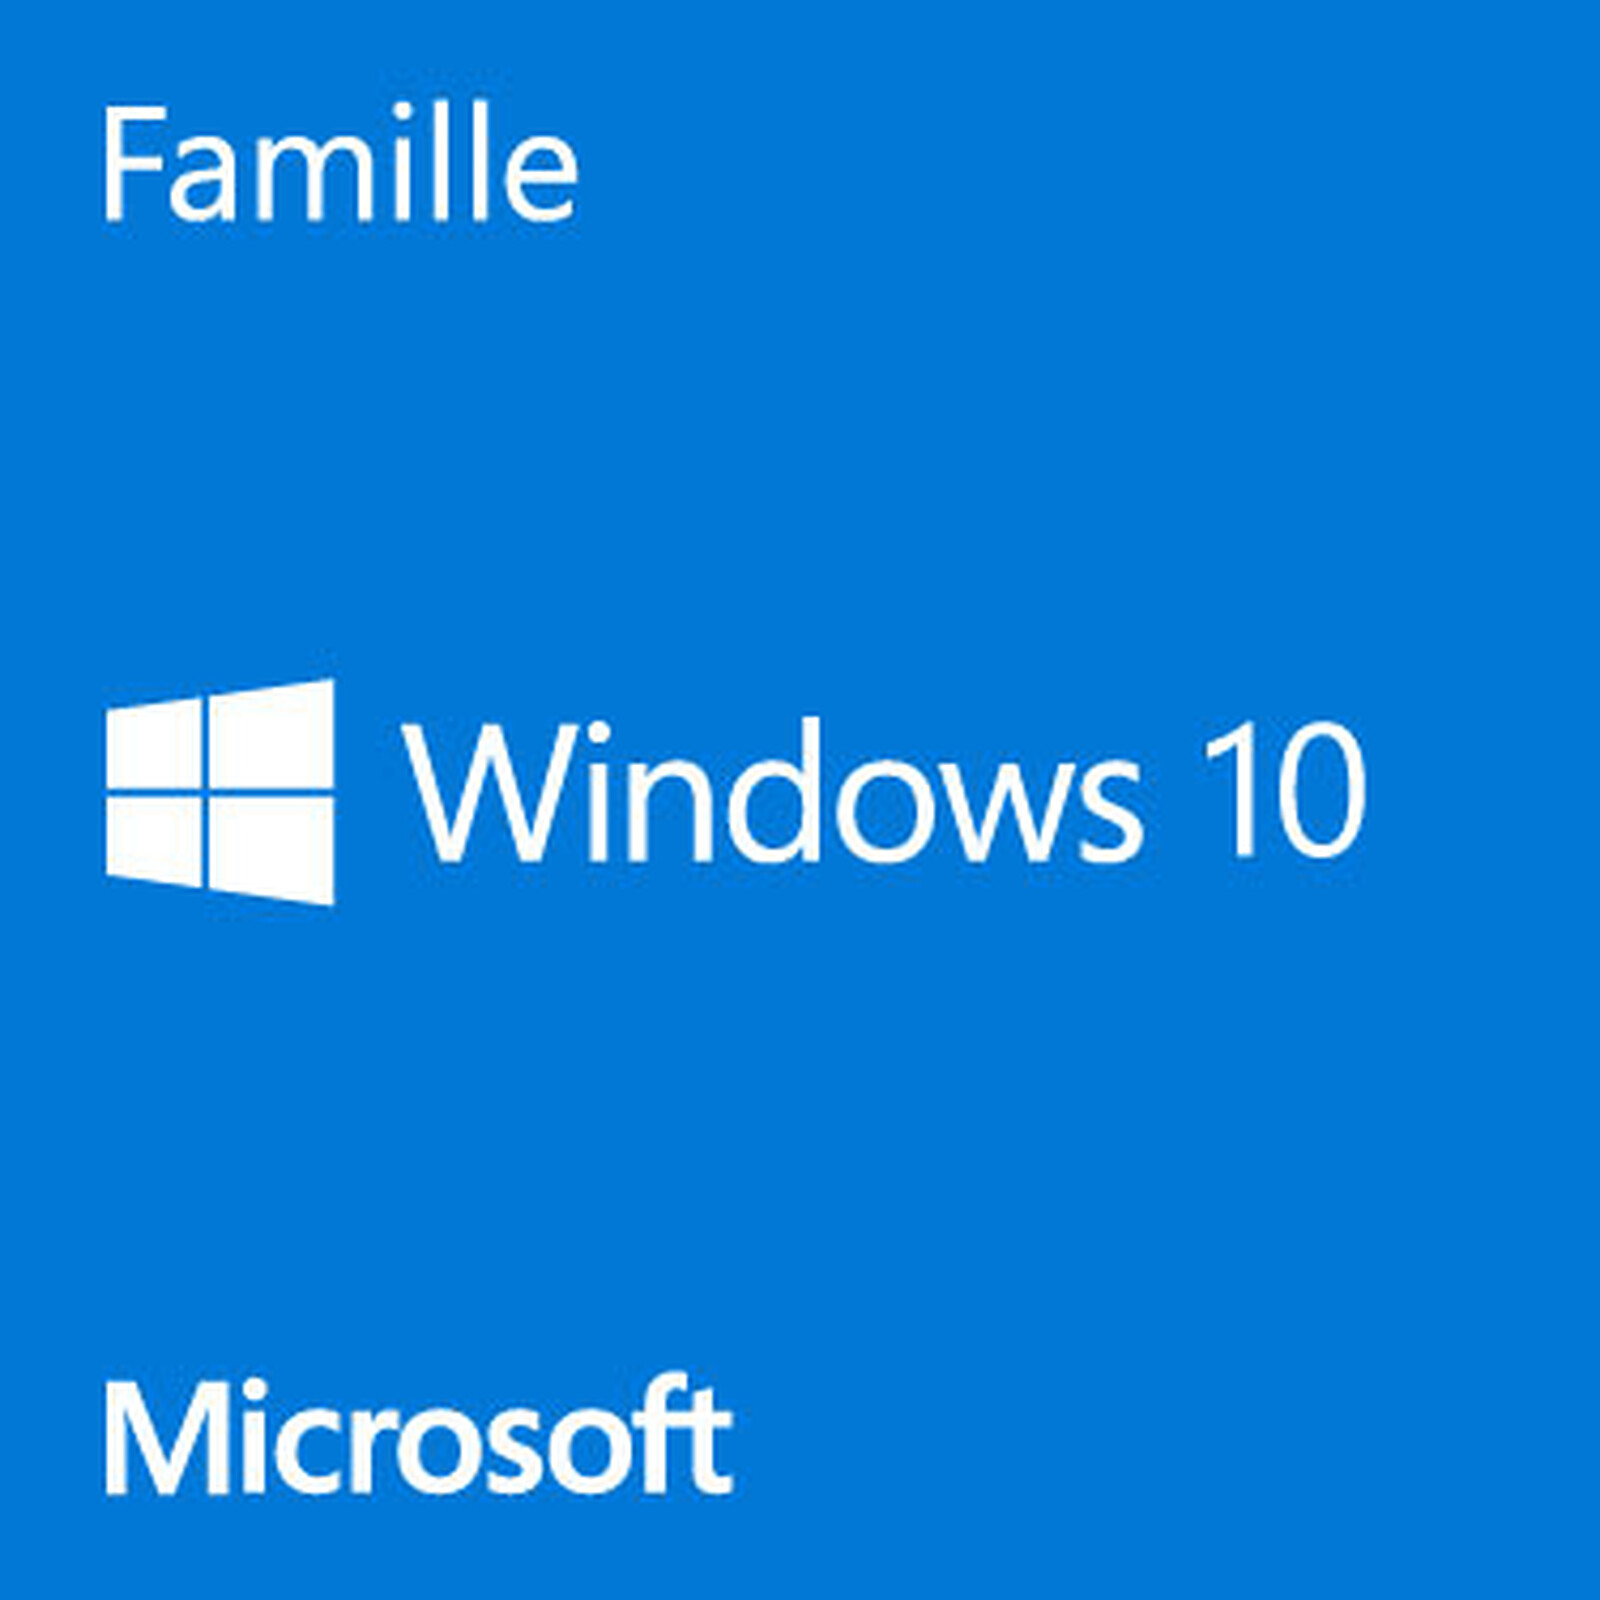 Microsoft Windows 10 Family 32/64 bits - Versión de USB - Windows Microsoft en LDLC | ¡Musericordia!